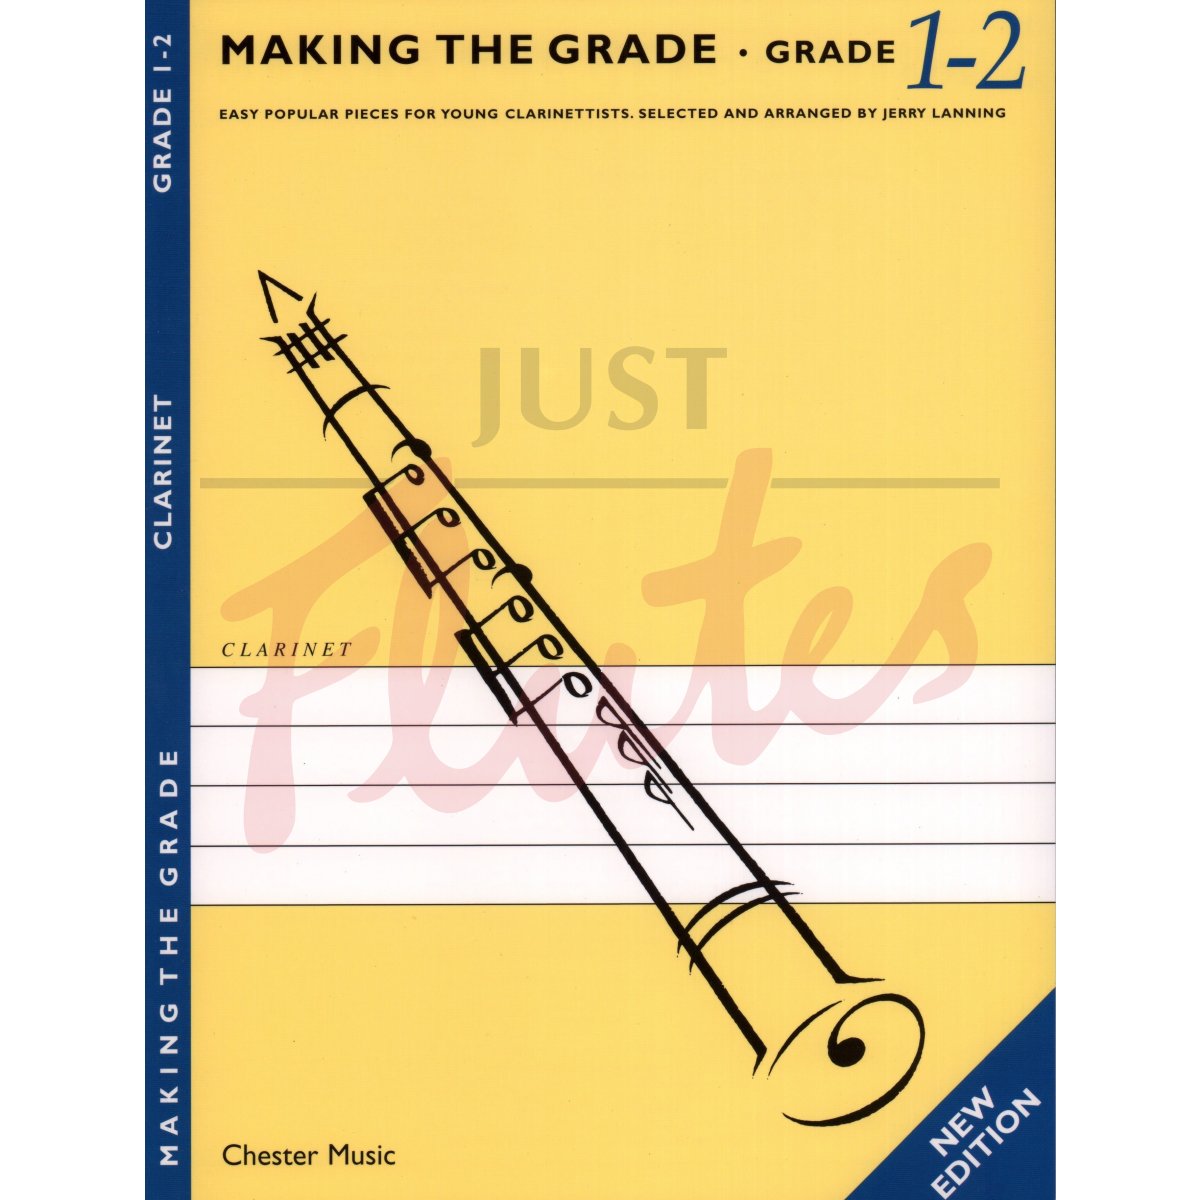 Making the Grade [Clarinet], Grades 1-2